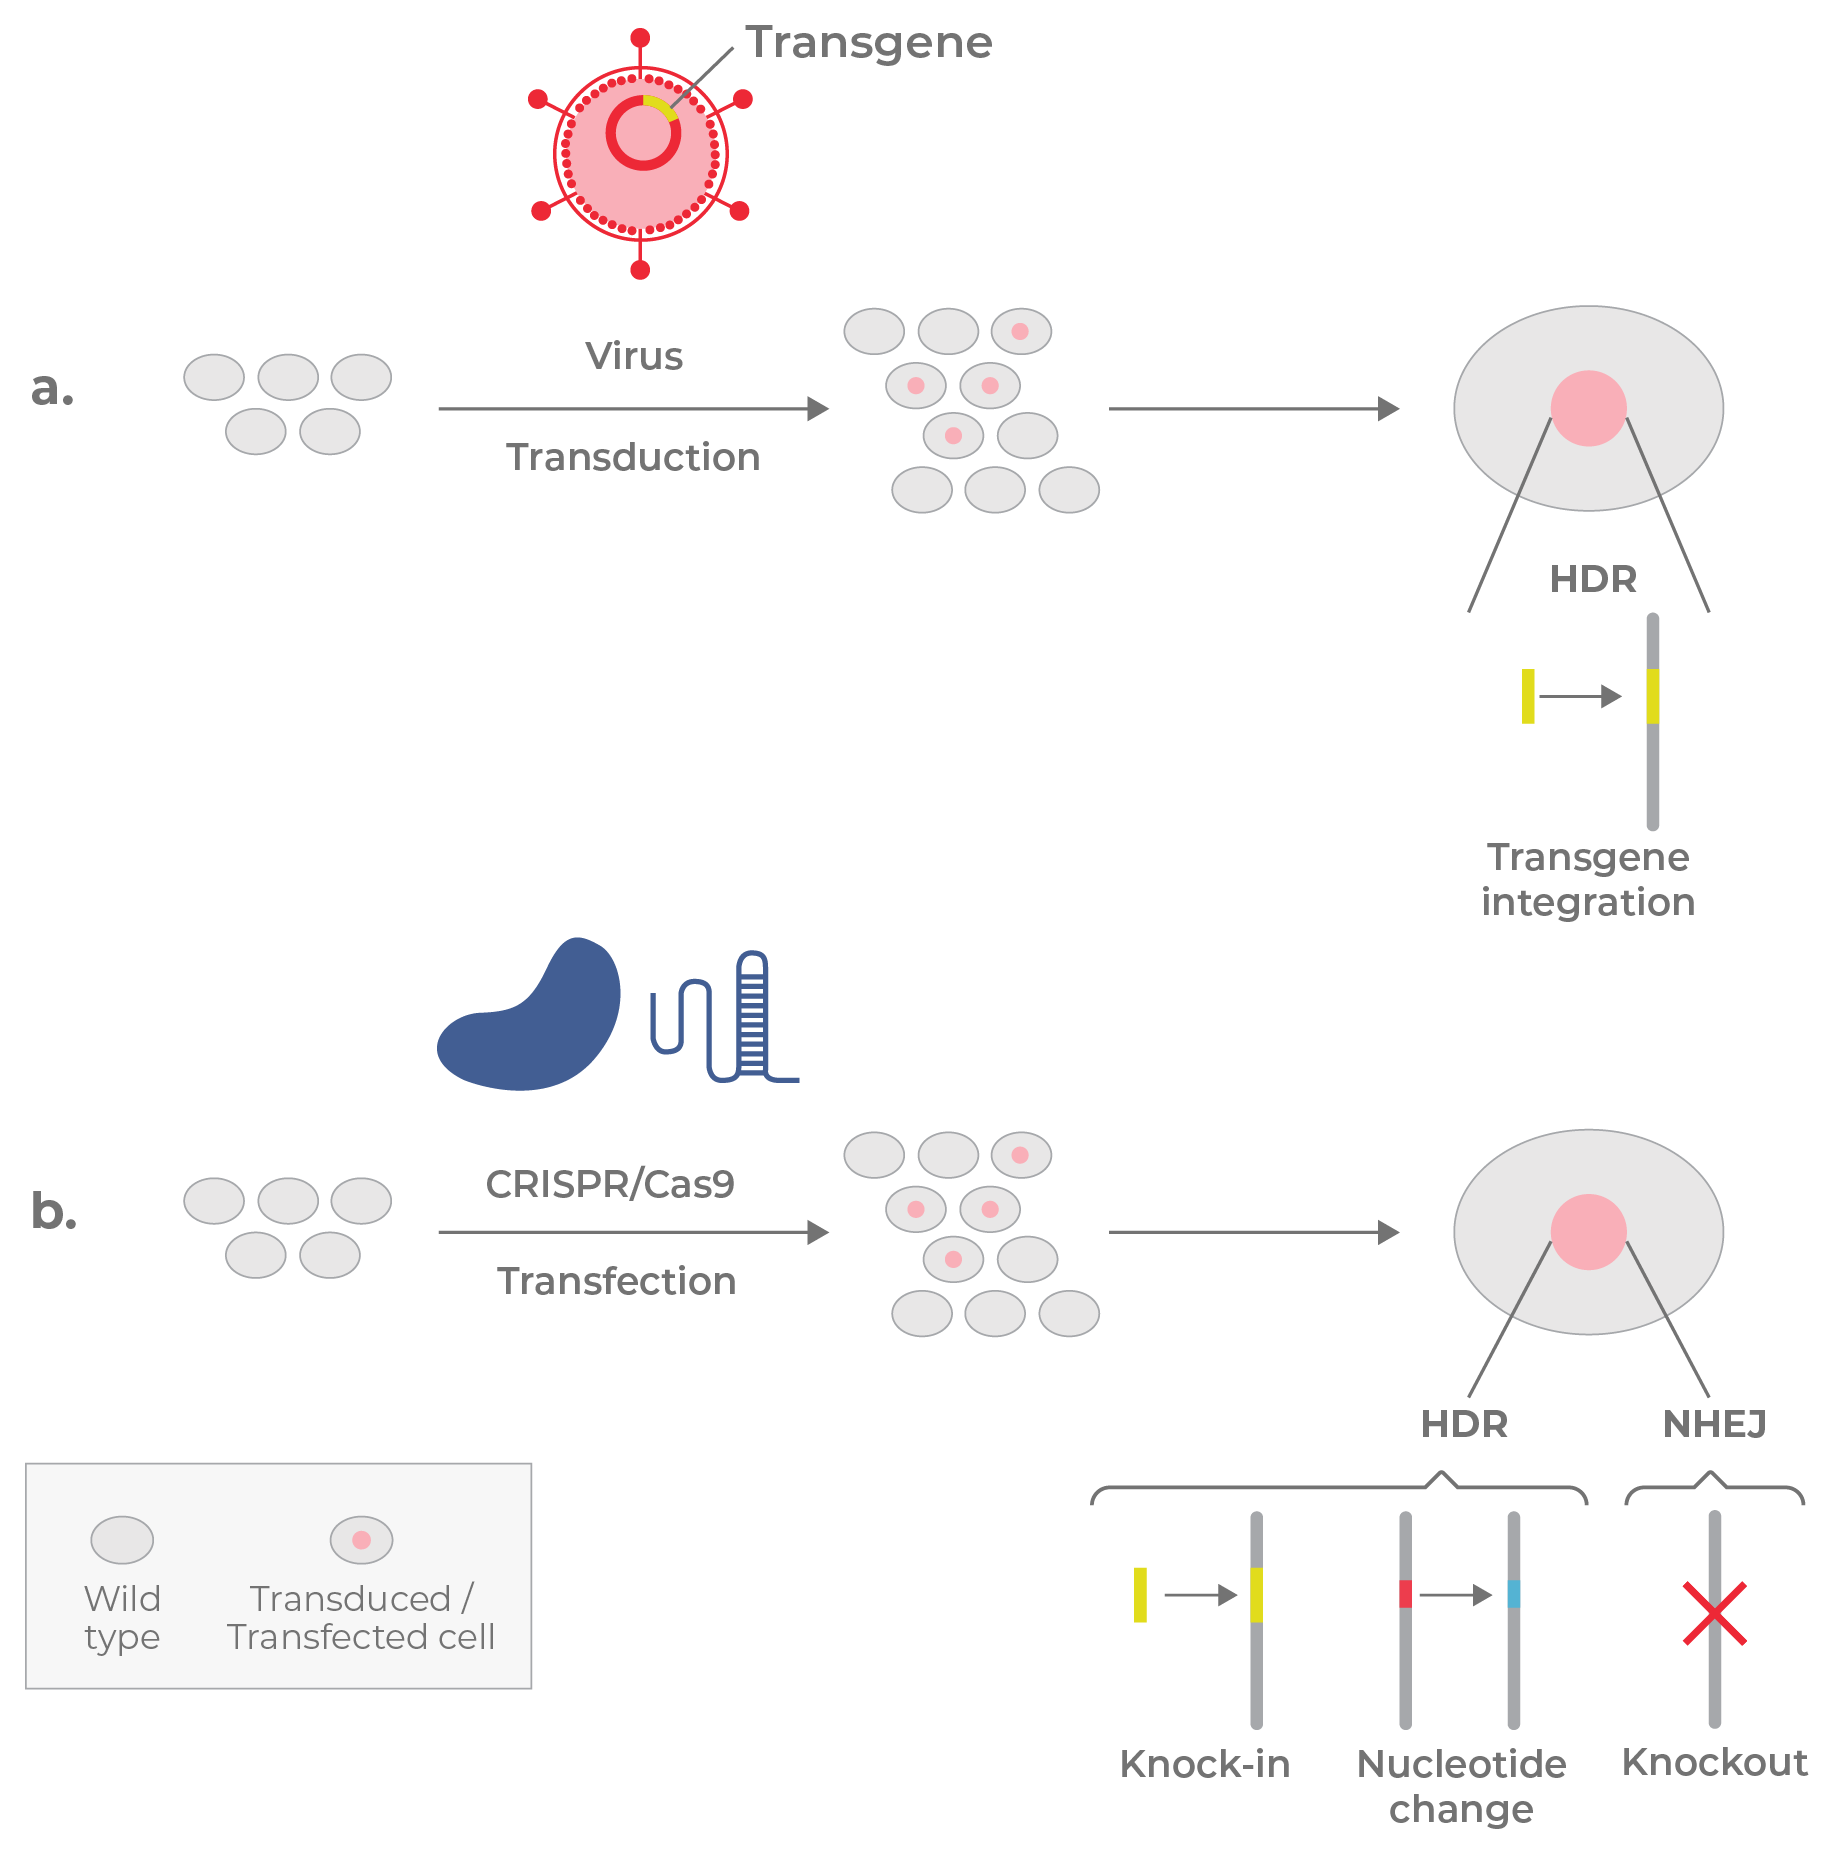 Figure 16. Genomic manipulation by viruses and gene editors.